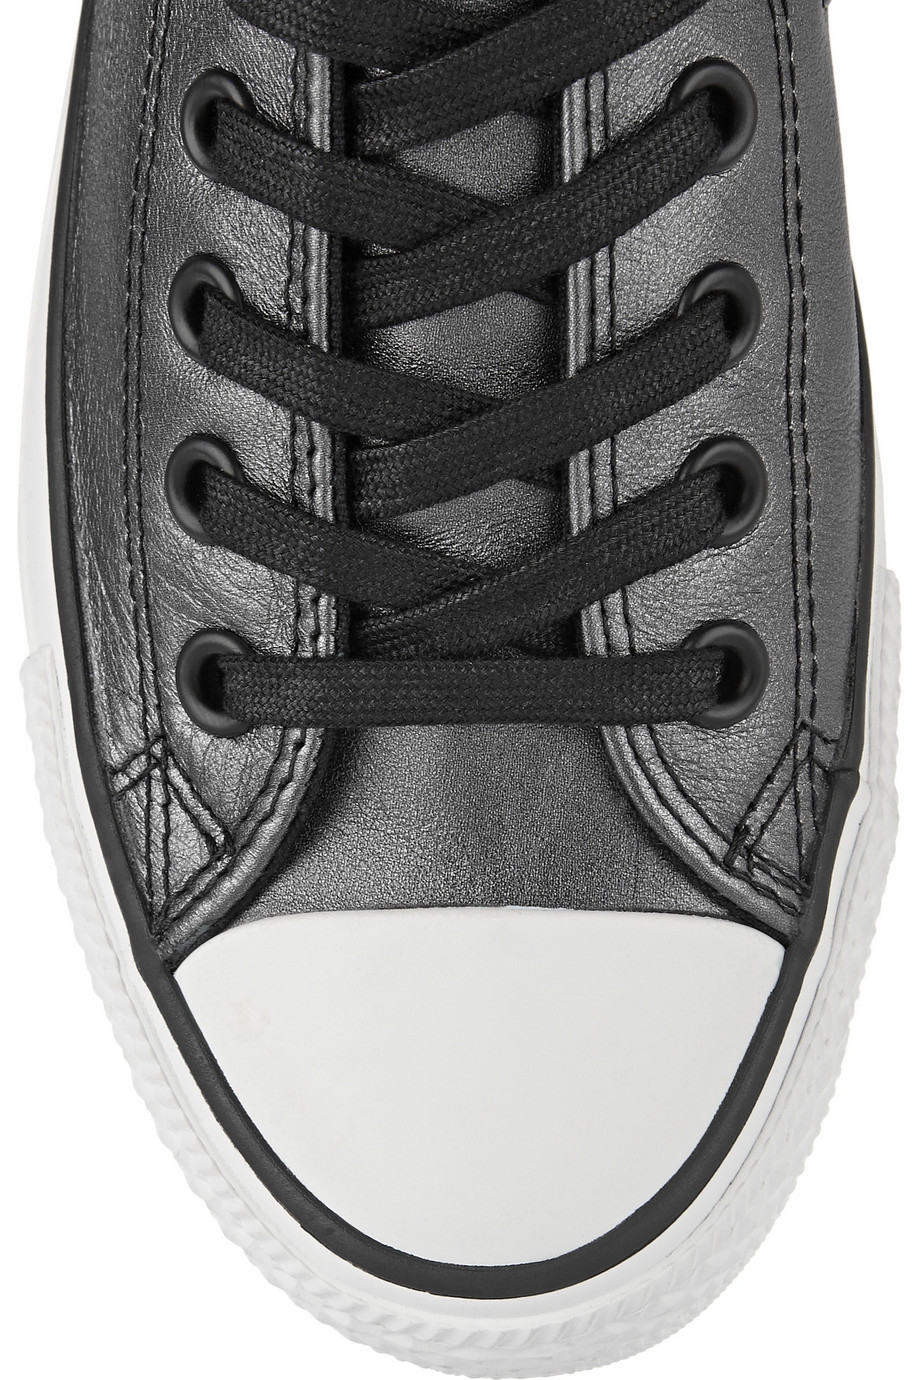 dark grey leather converse